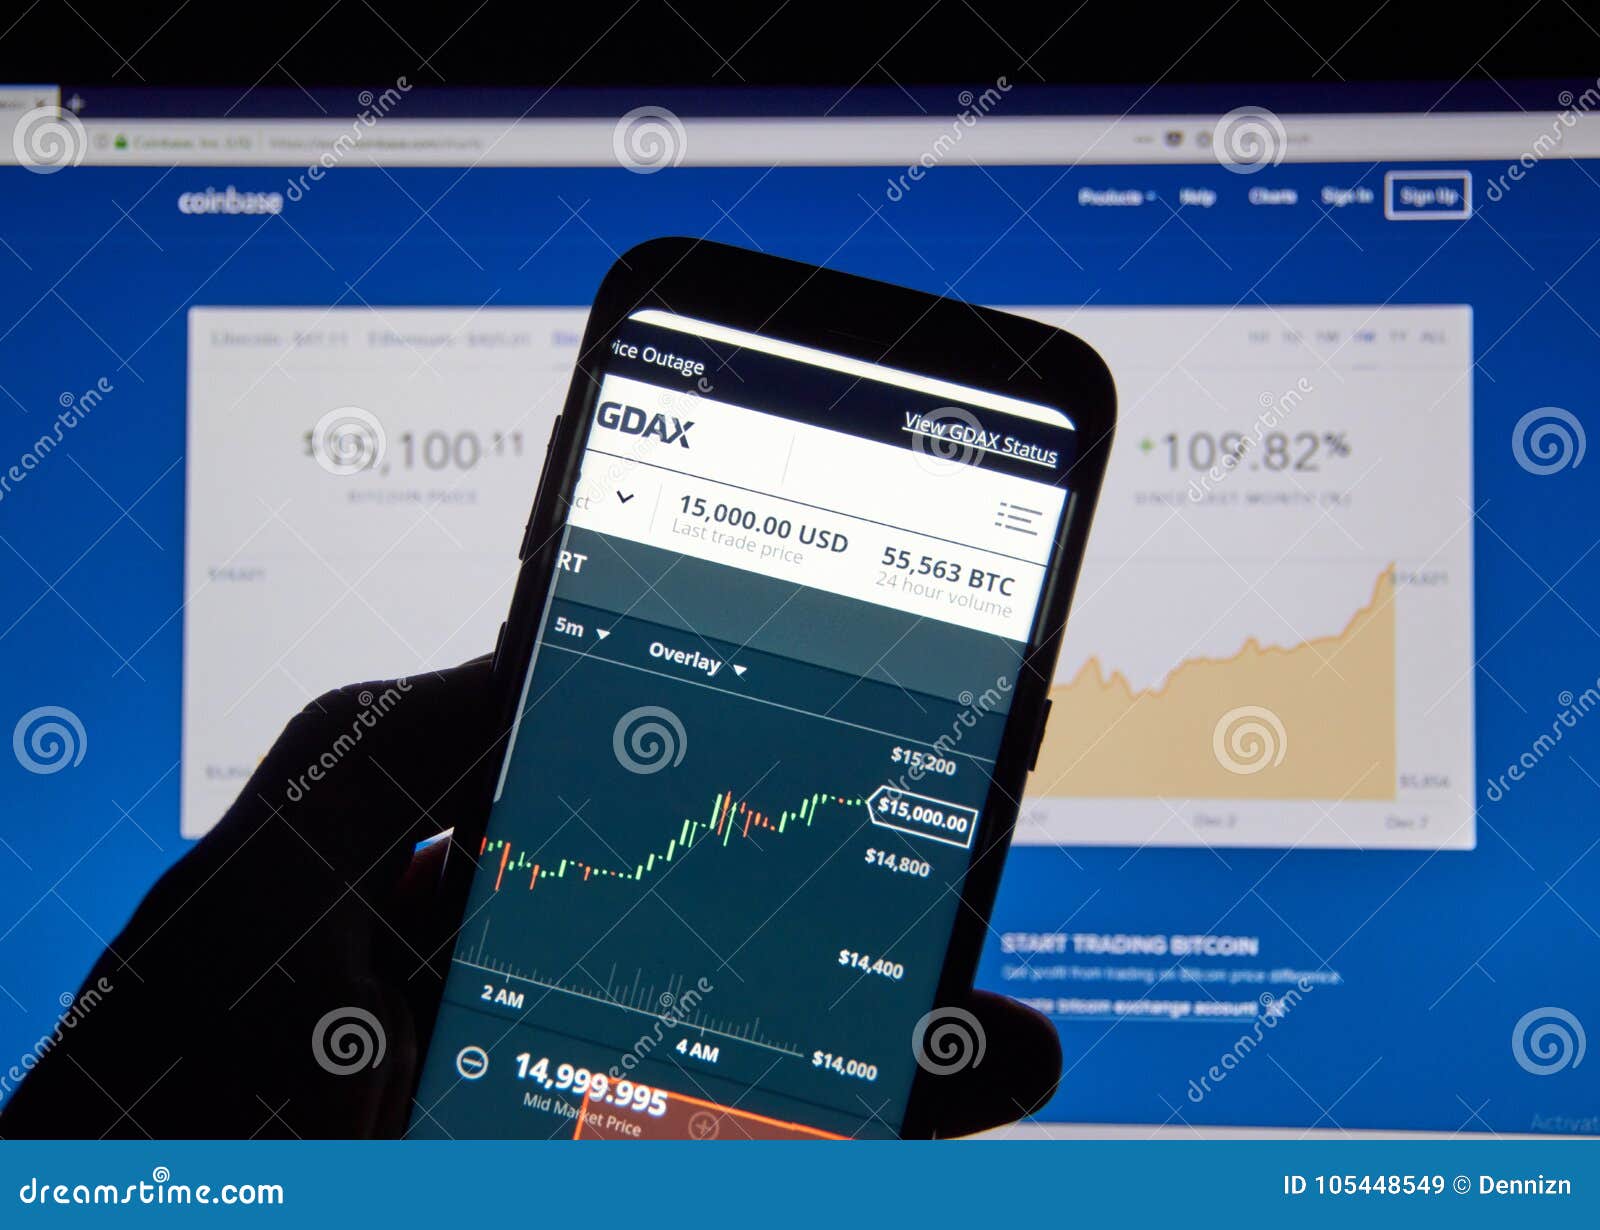 Bitcoin Buy Price Coinbase - Coinbase, app for buying bitcoin, climbs Apple App Store - Business ...